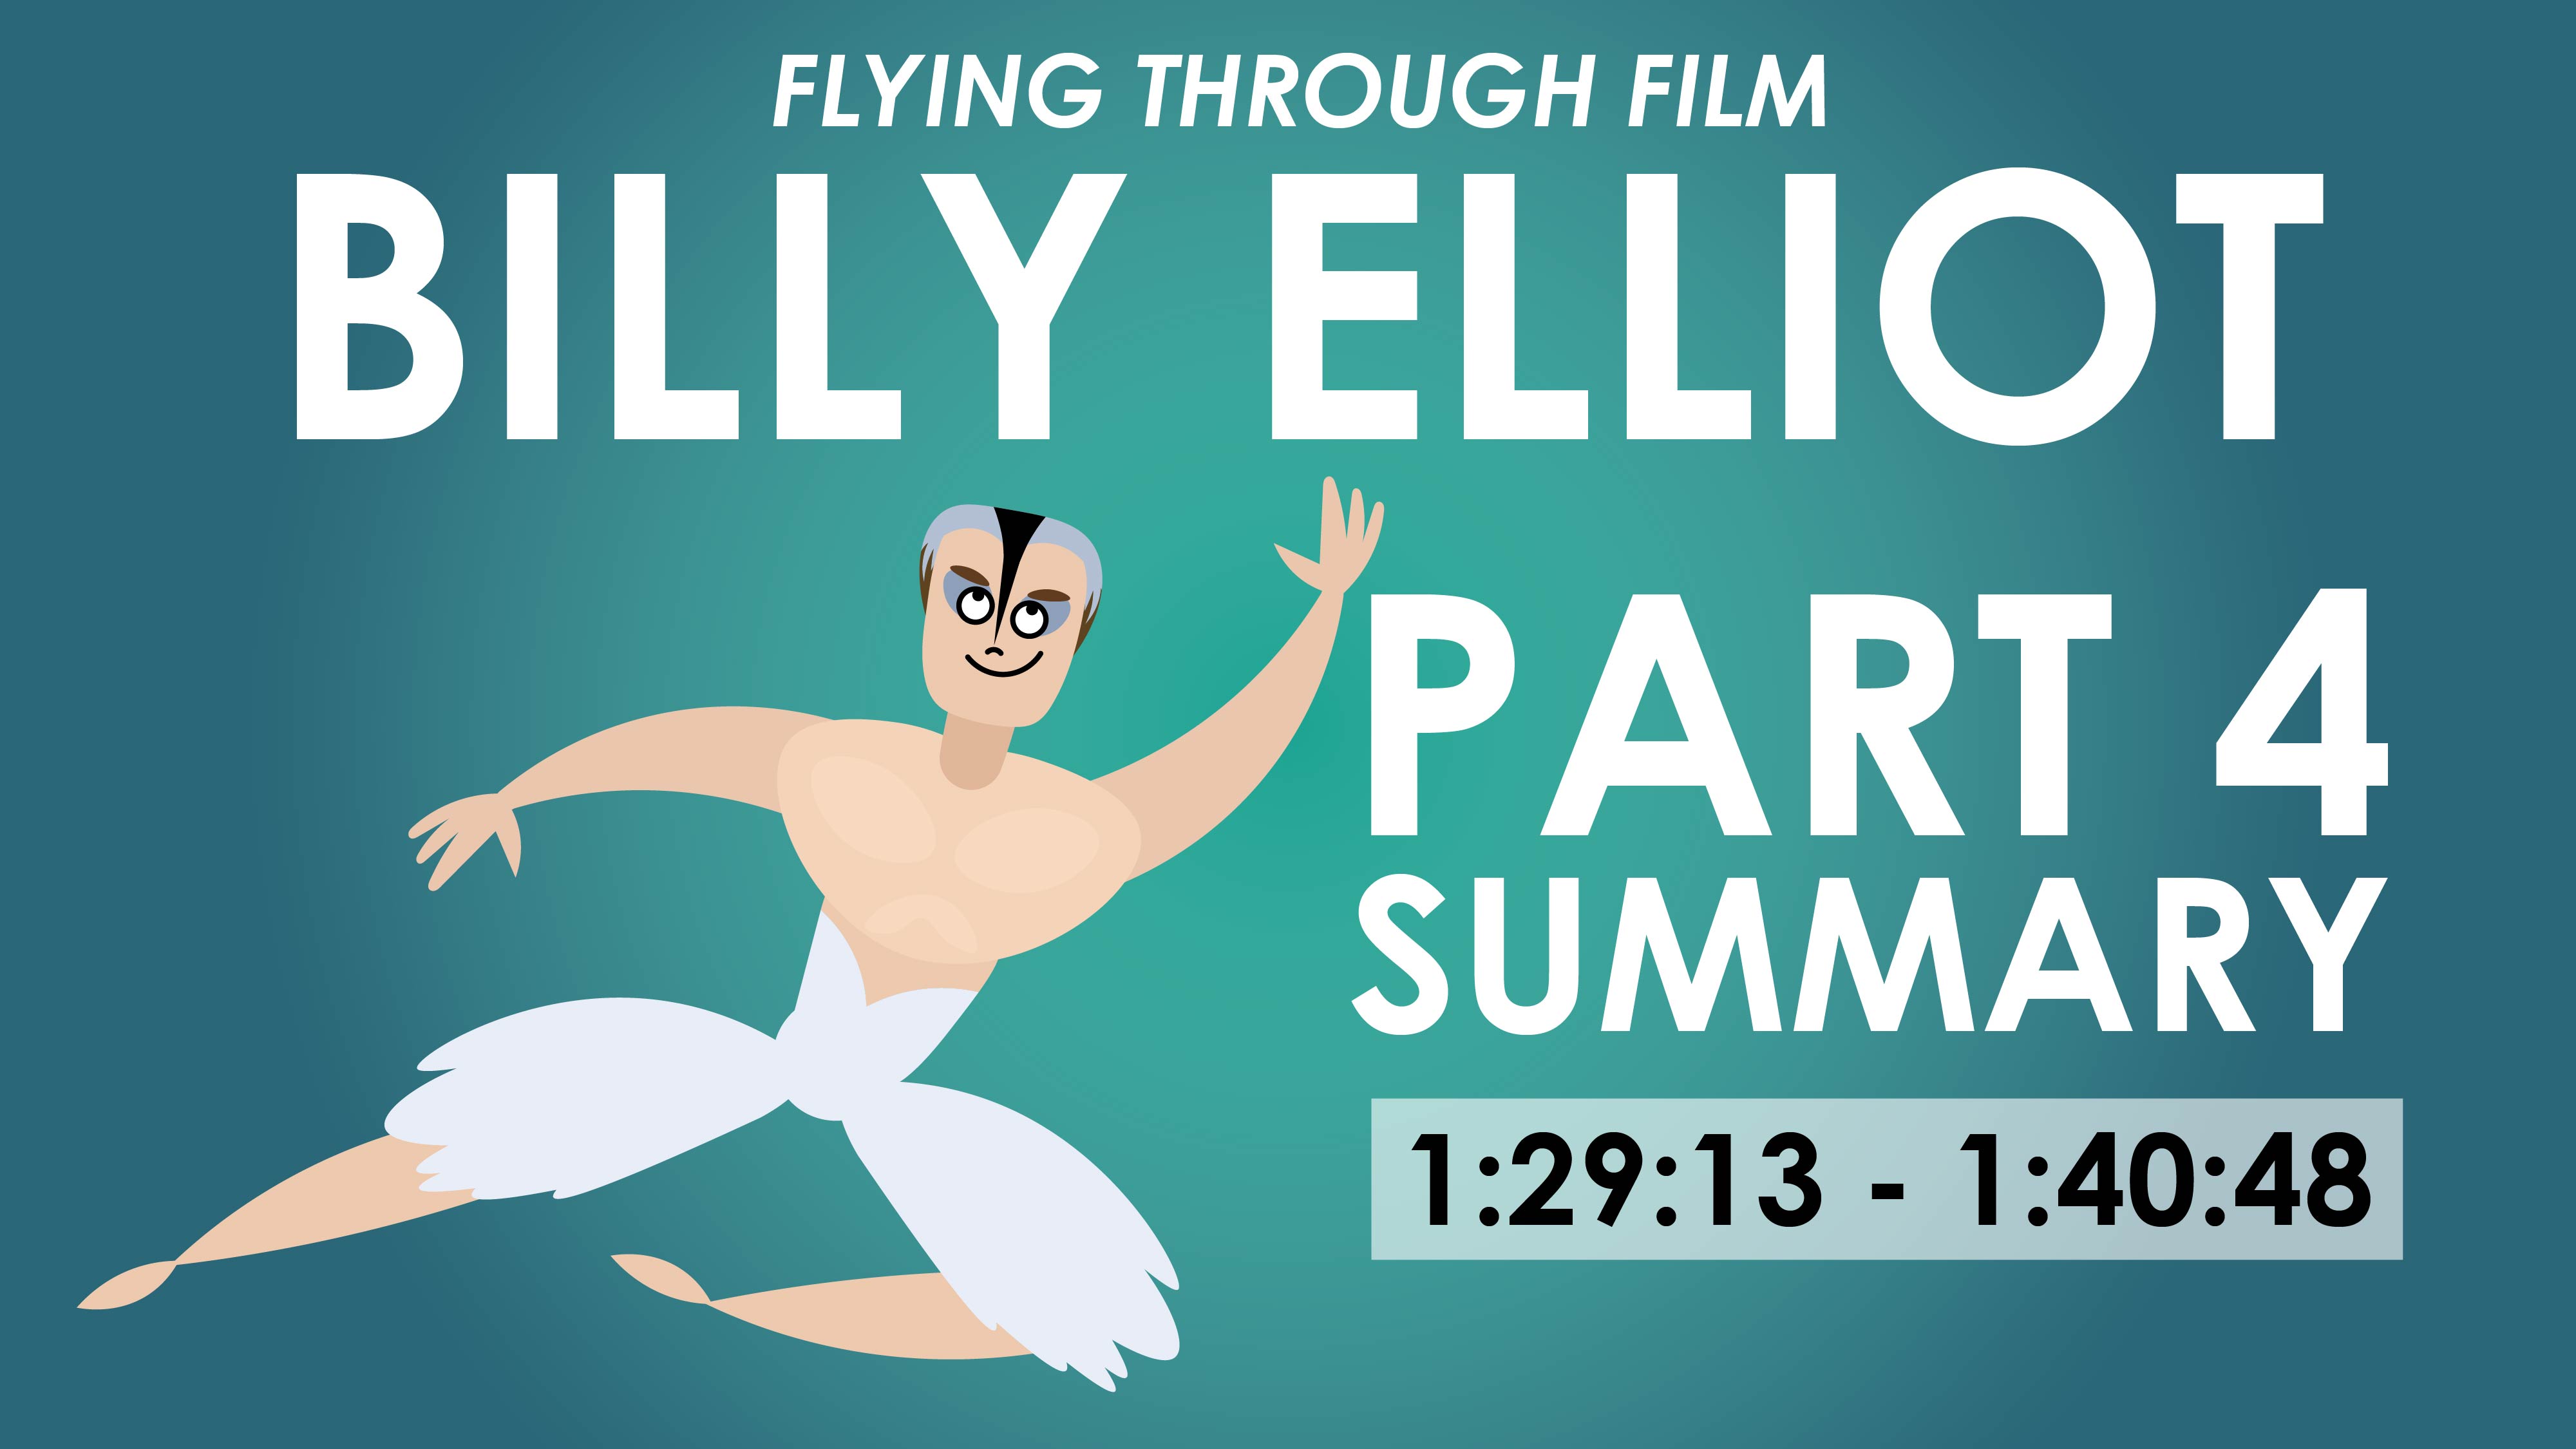 Billy Elliot - Part 4 Summary (1:29:13 - 1:40:48)- Flying Through Film Series